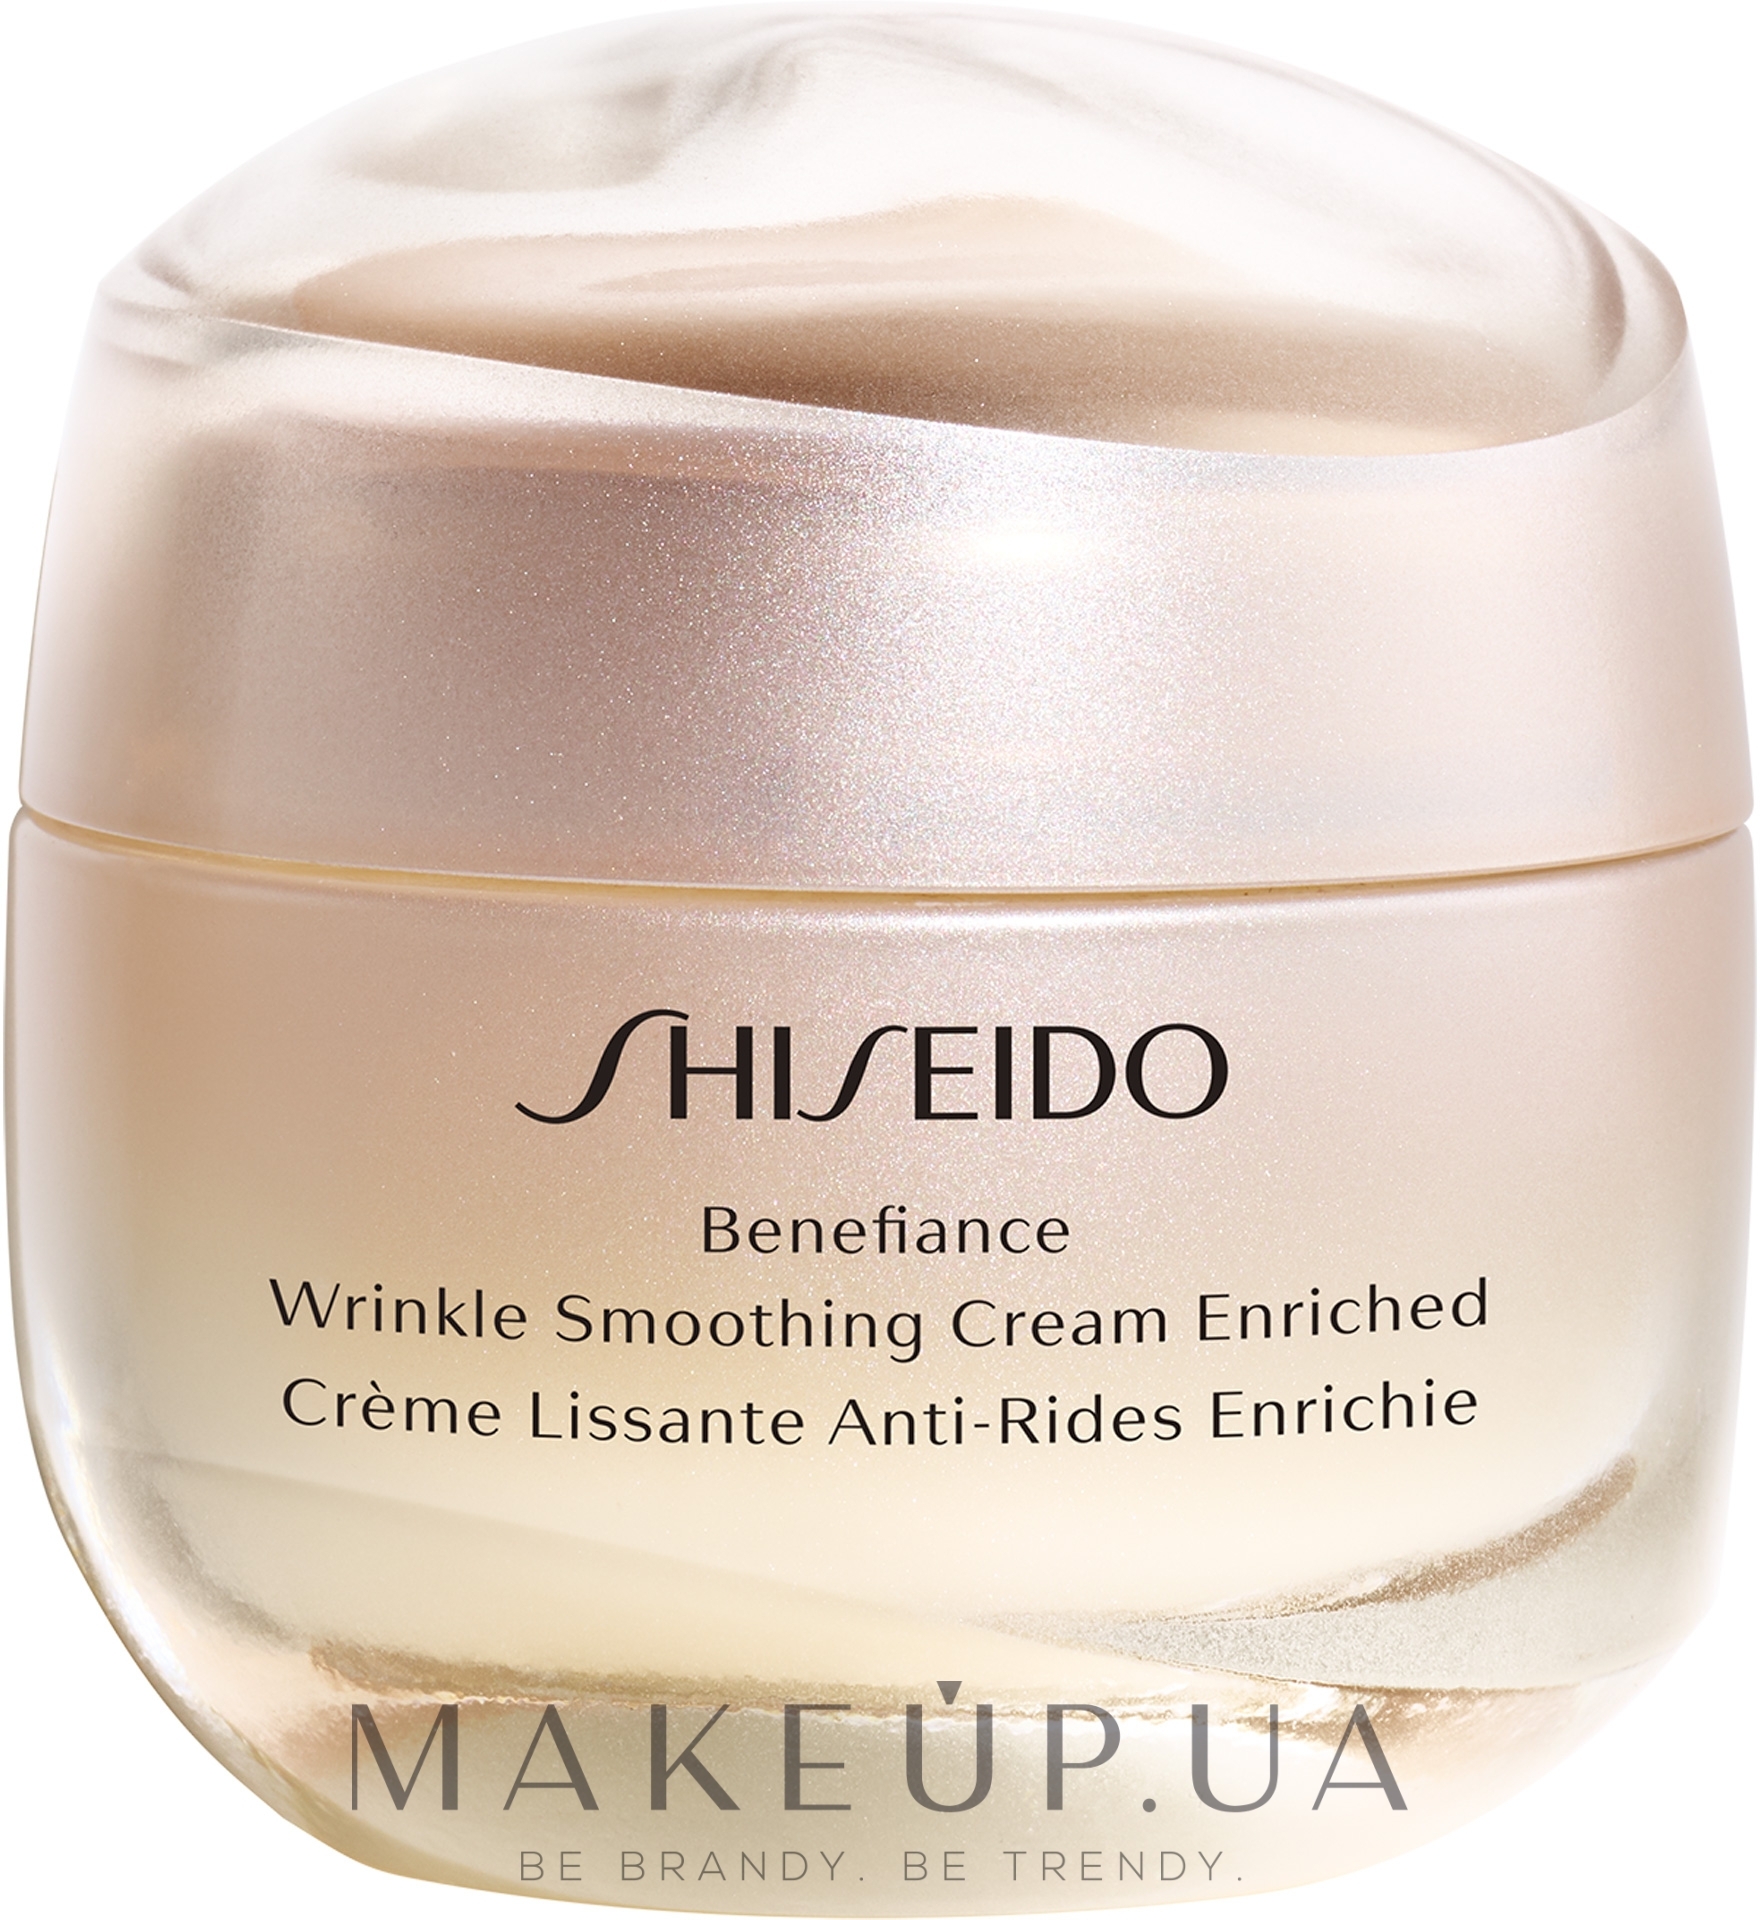 Shiseido benefiance wrinkle smoothing. Shiseido Wrinkle Smoothing Cream. Shiseido Benefiance. Шисейдо крем антивозрастной. Shiseido Ginza Tokyo Benefiance Wrinkle Smoothing Day Cream broad Spectrum SPF 23 Sunscreen.